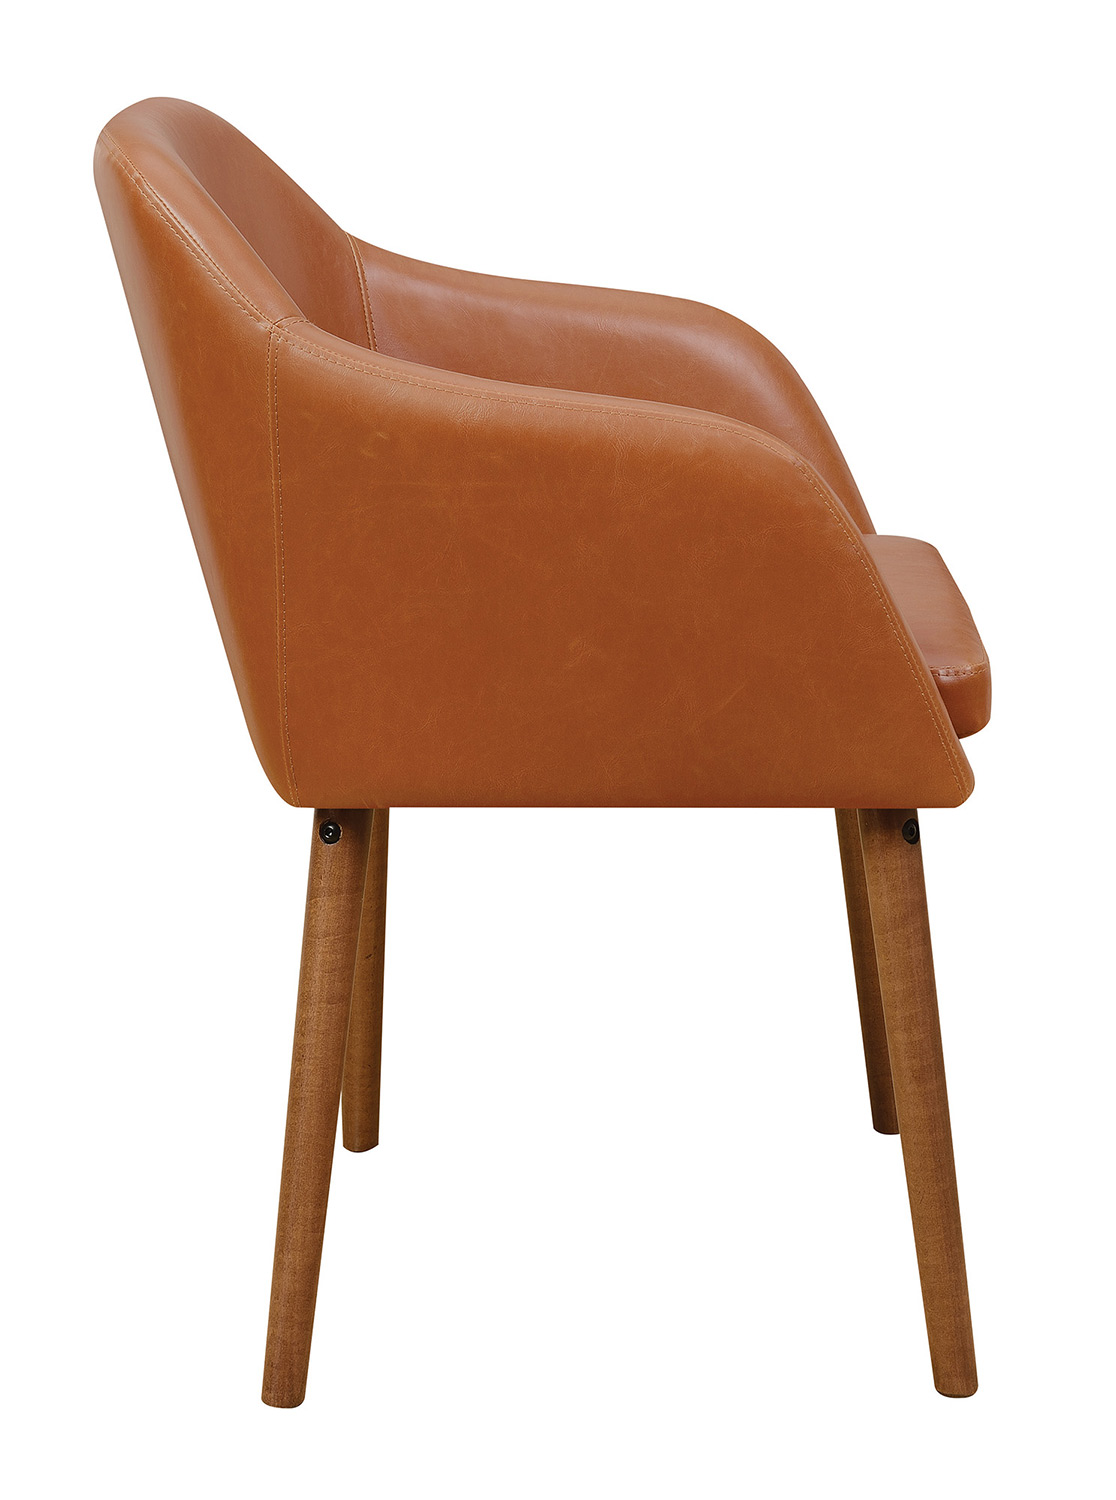 Coaster Jamestown Side Chair - Cognac